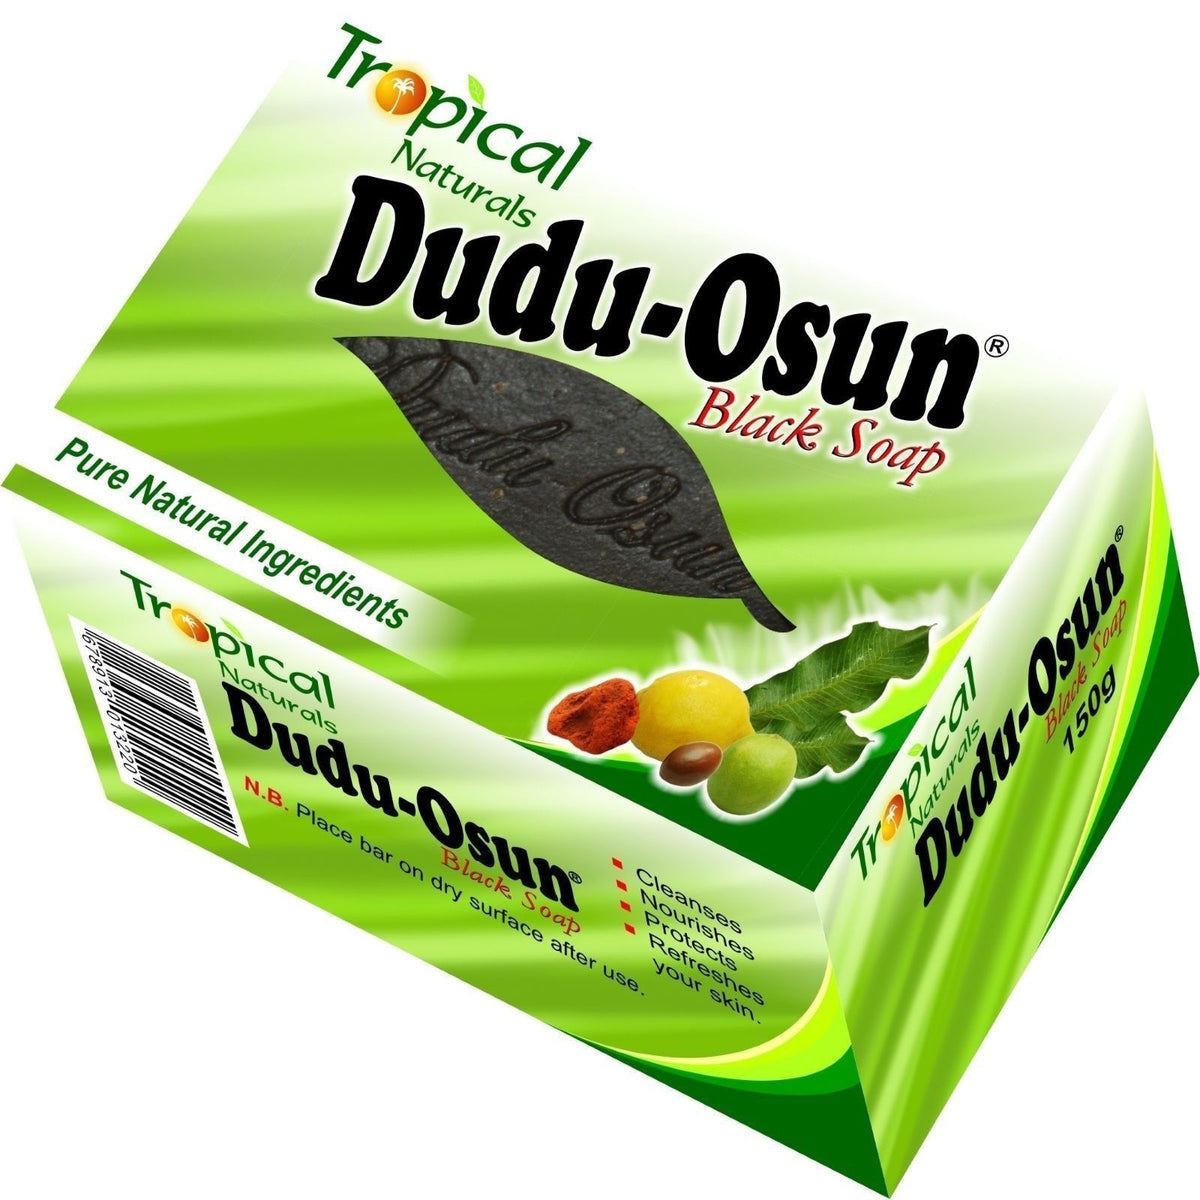 Tropical naturals dudu osun soap - The secret to healthy skin